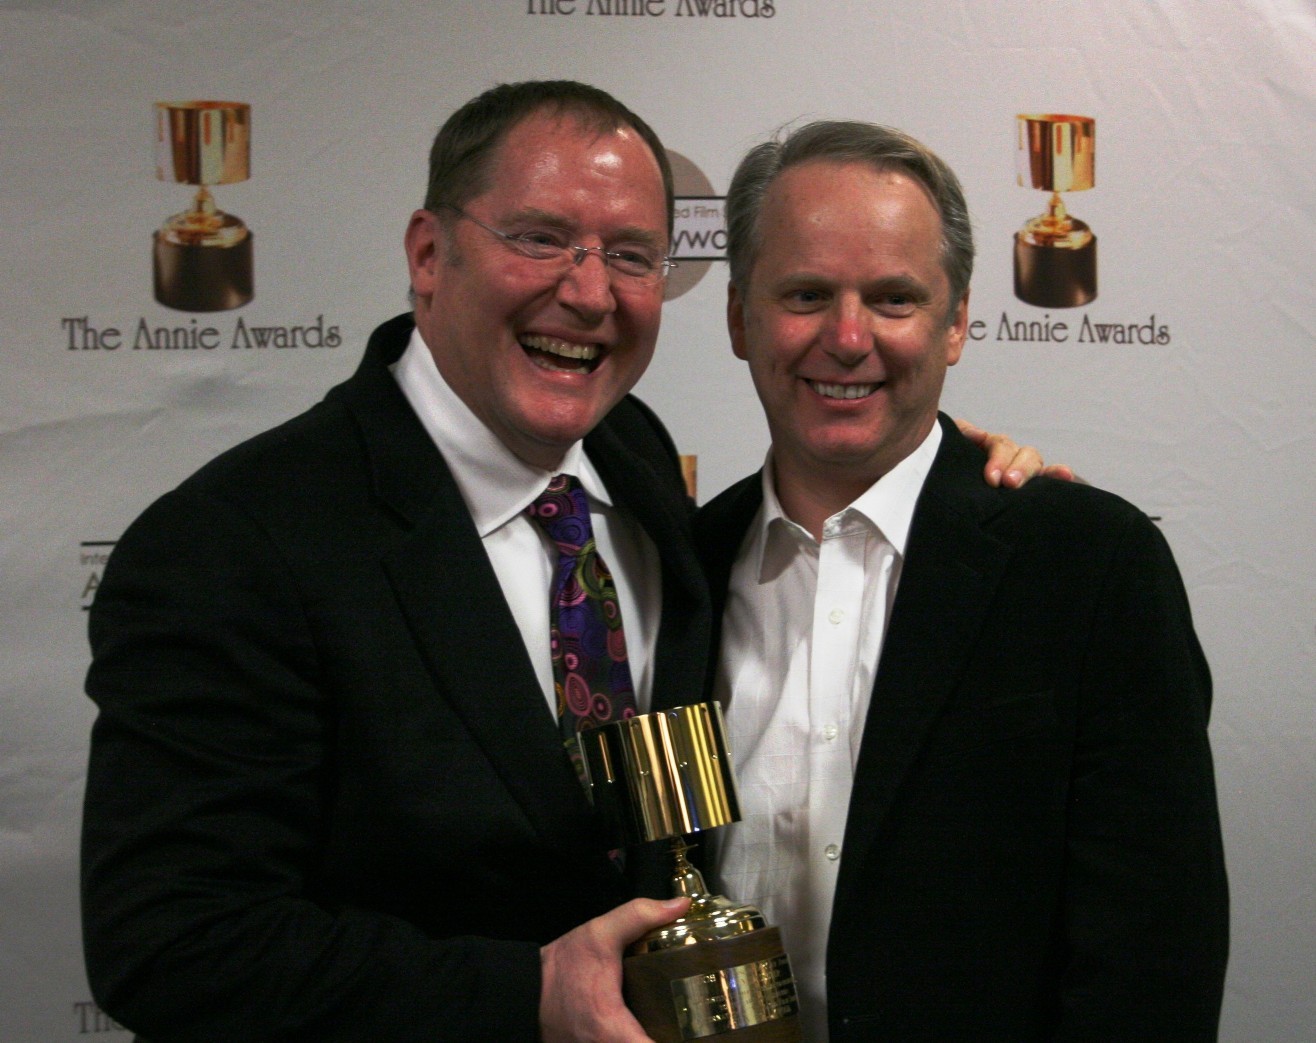 John Lasseter and Nick Park, Ub Iwerks award winners